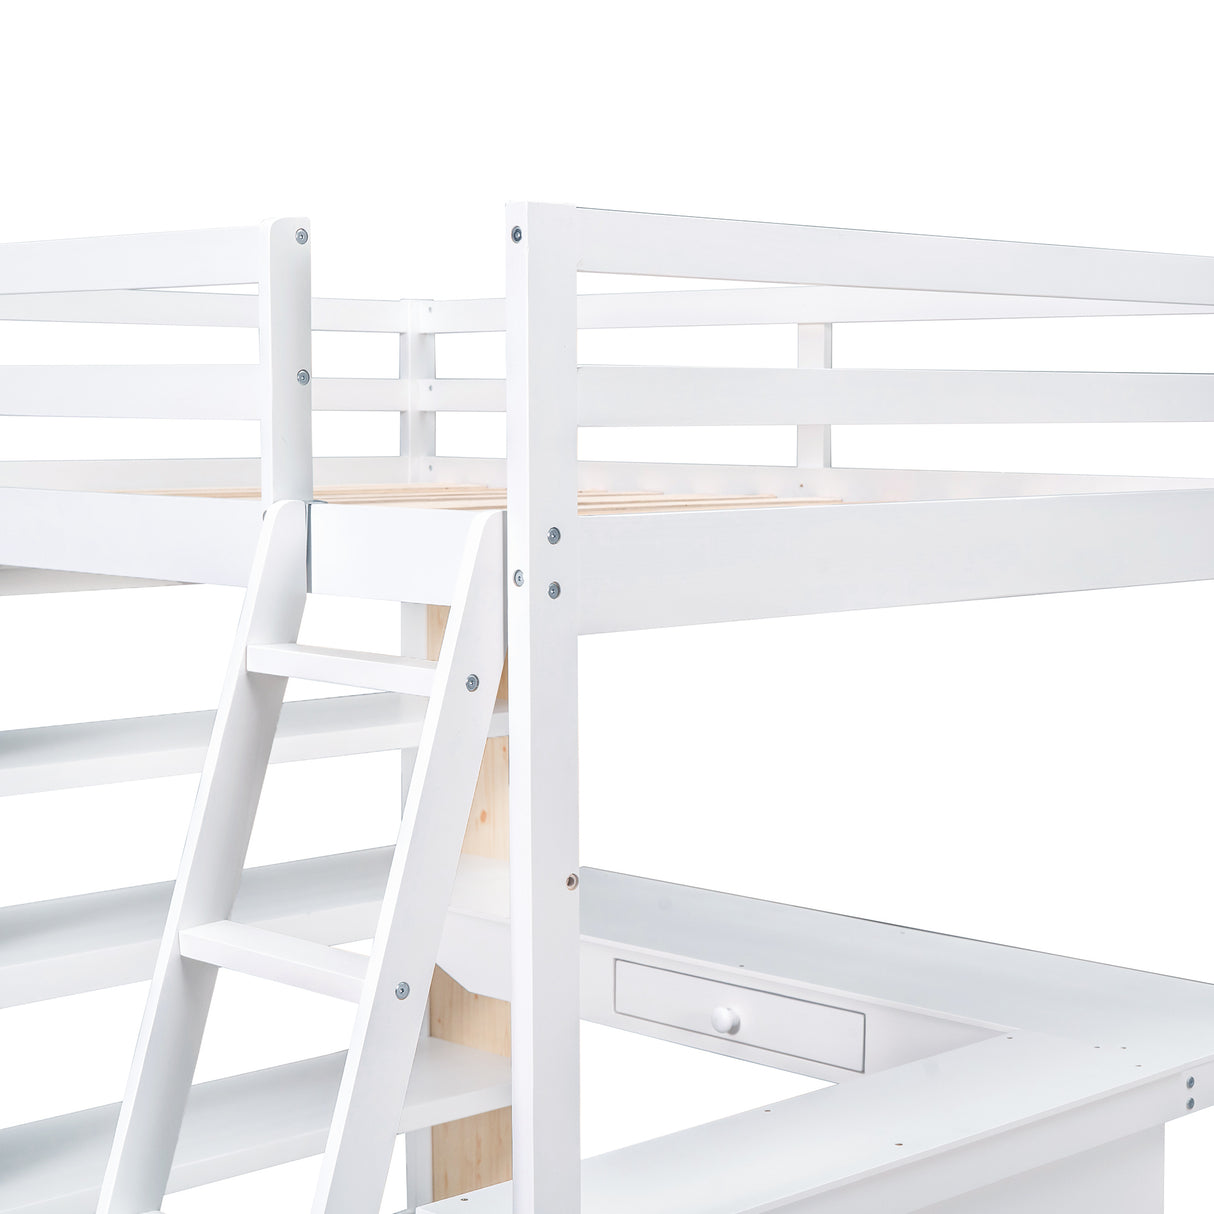 Full Size Loft Bed with Ladder, Shelves, and Desk, White - Home Elegance USA